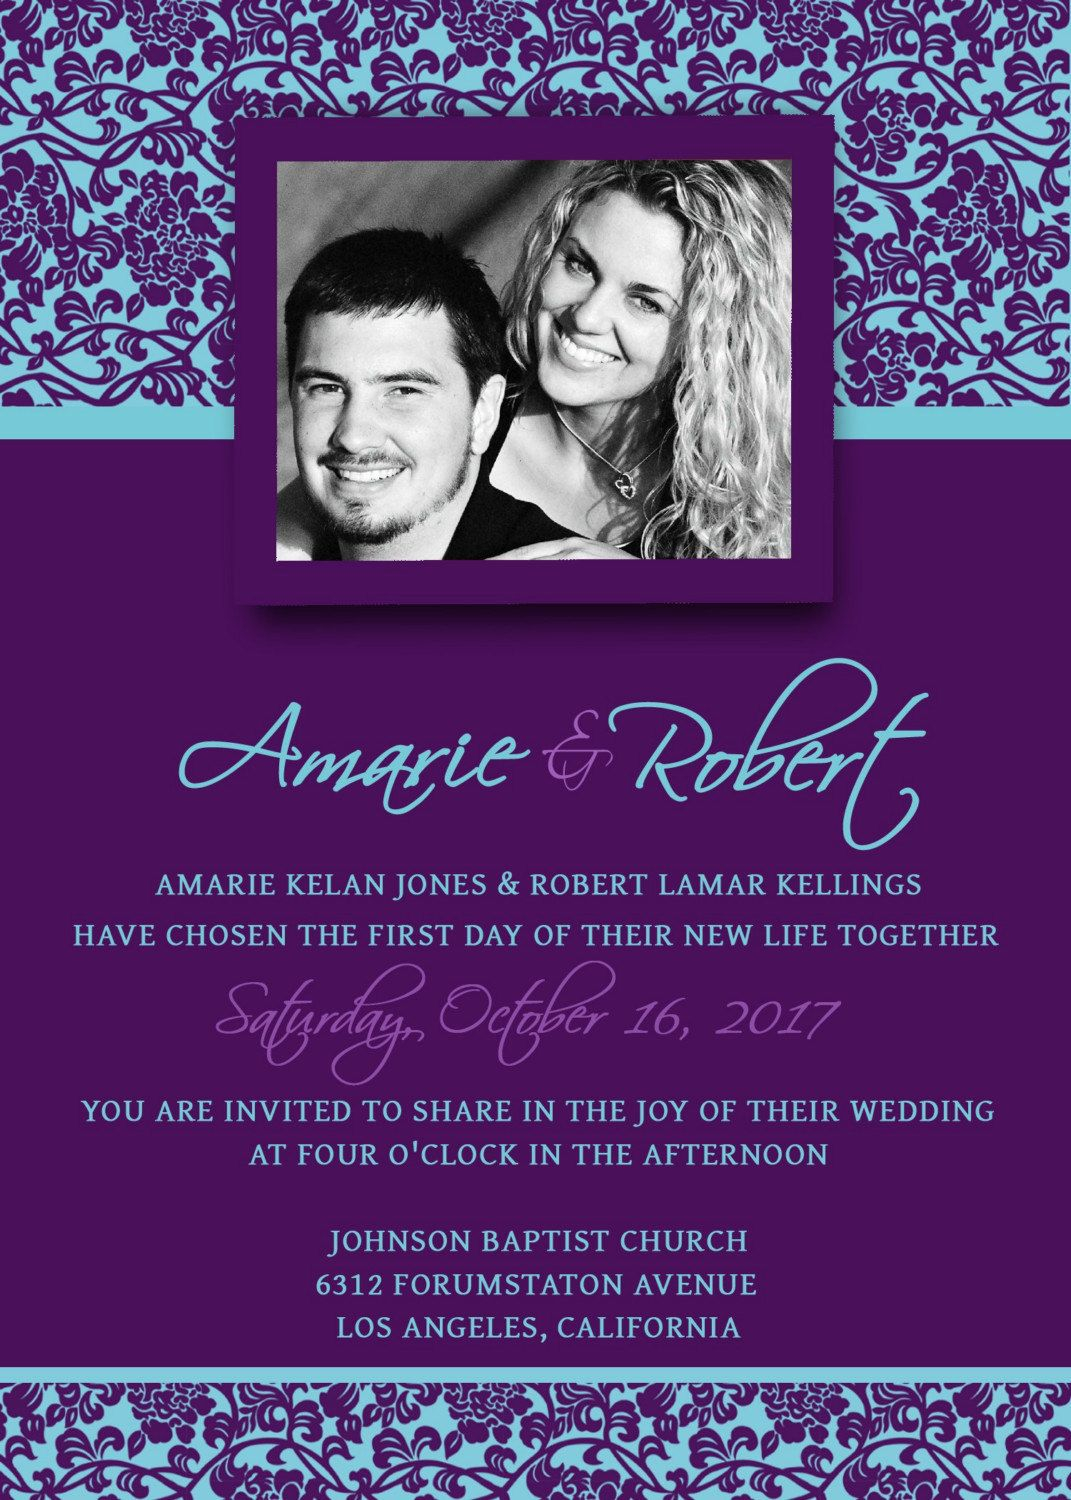 Printable Wedding Invitation Template Set Psd Photoshop Violet for dimensions 1071 X 1500